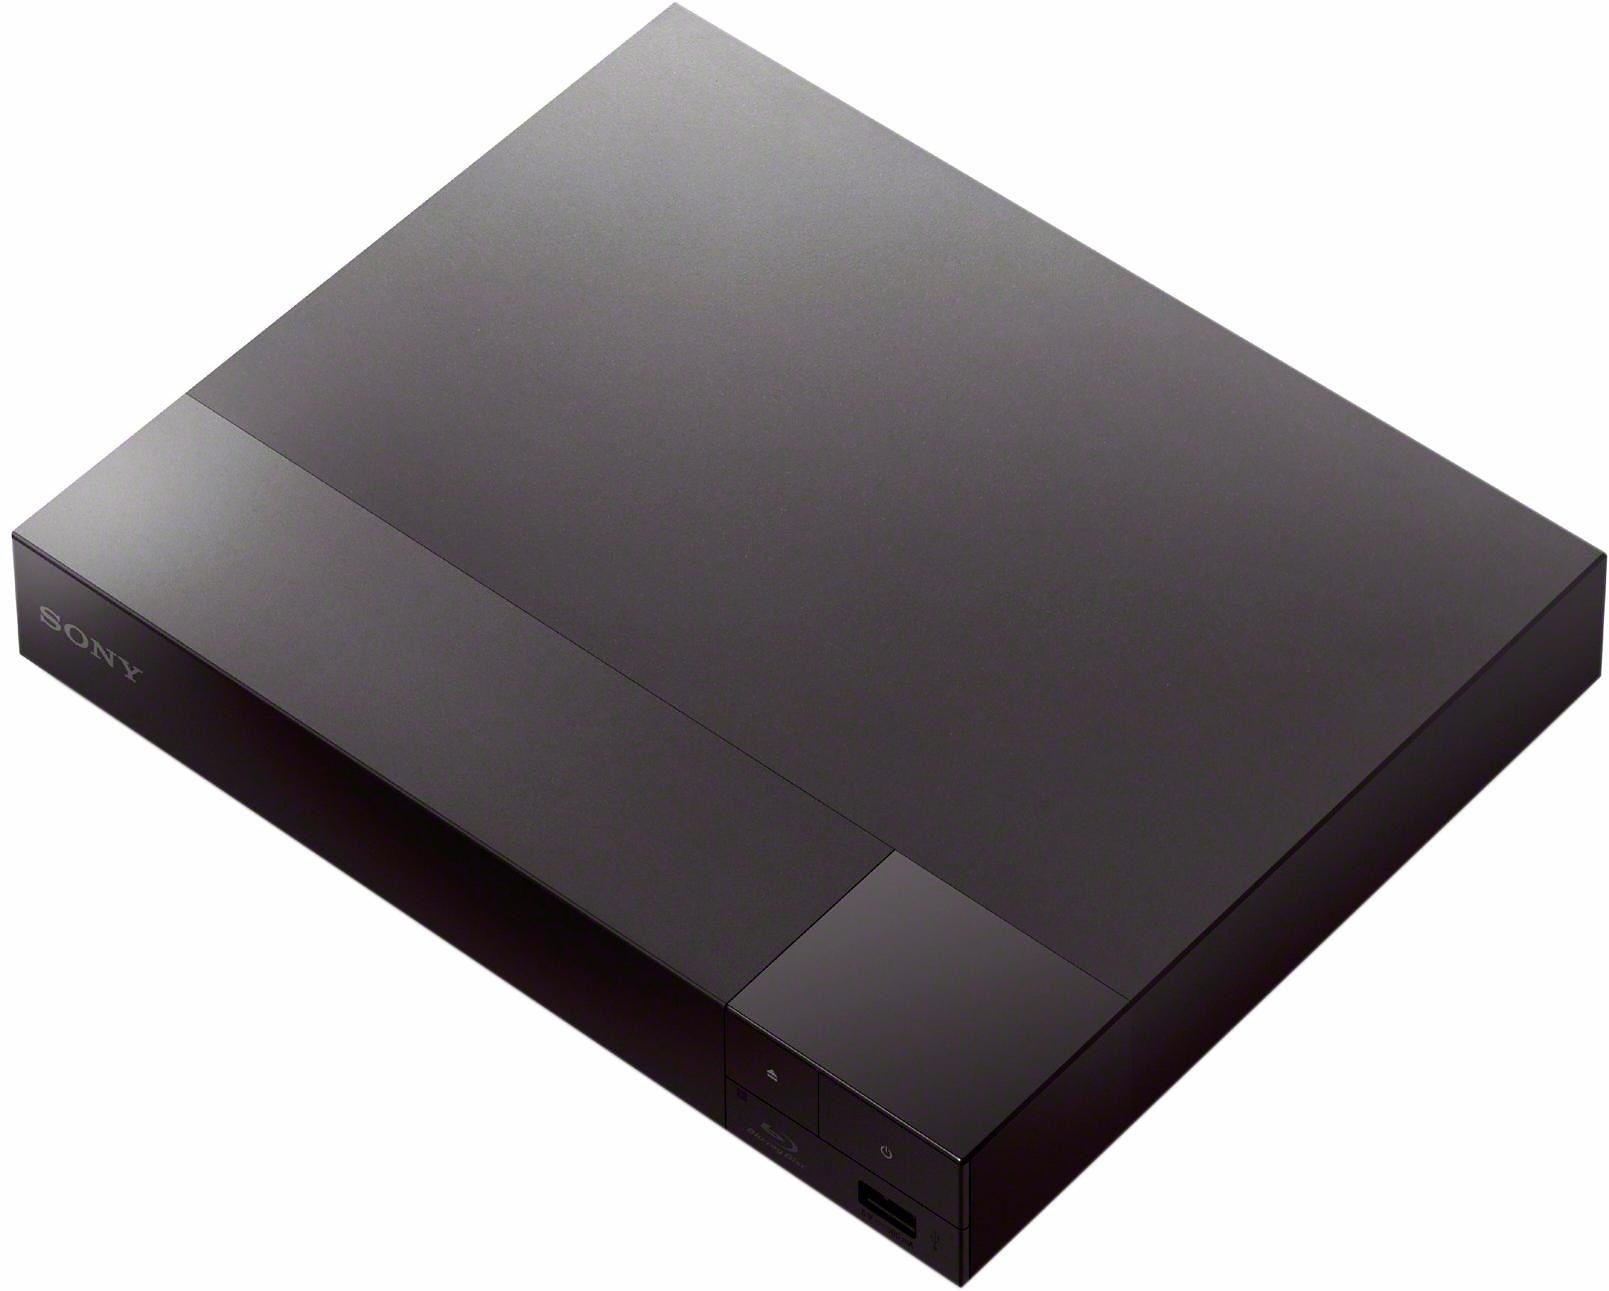 Sony BDP-S3700 Alliance), HD) (LAN (Wi-Fi WLAN, Full Blu-ray-Player Miracast (Ethernet)